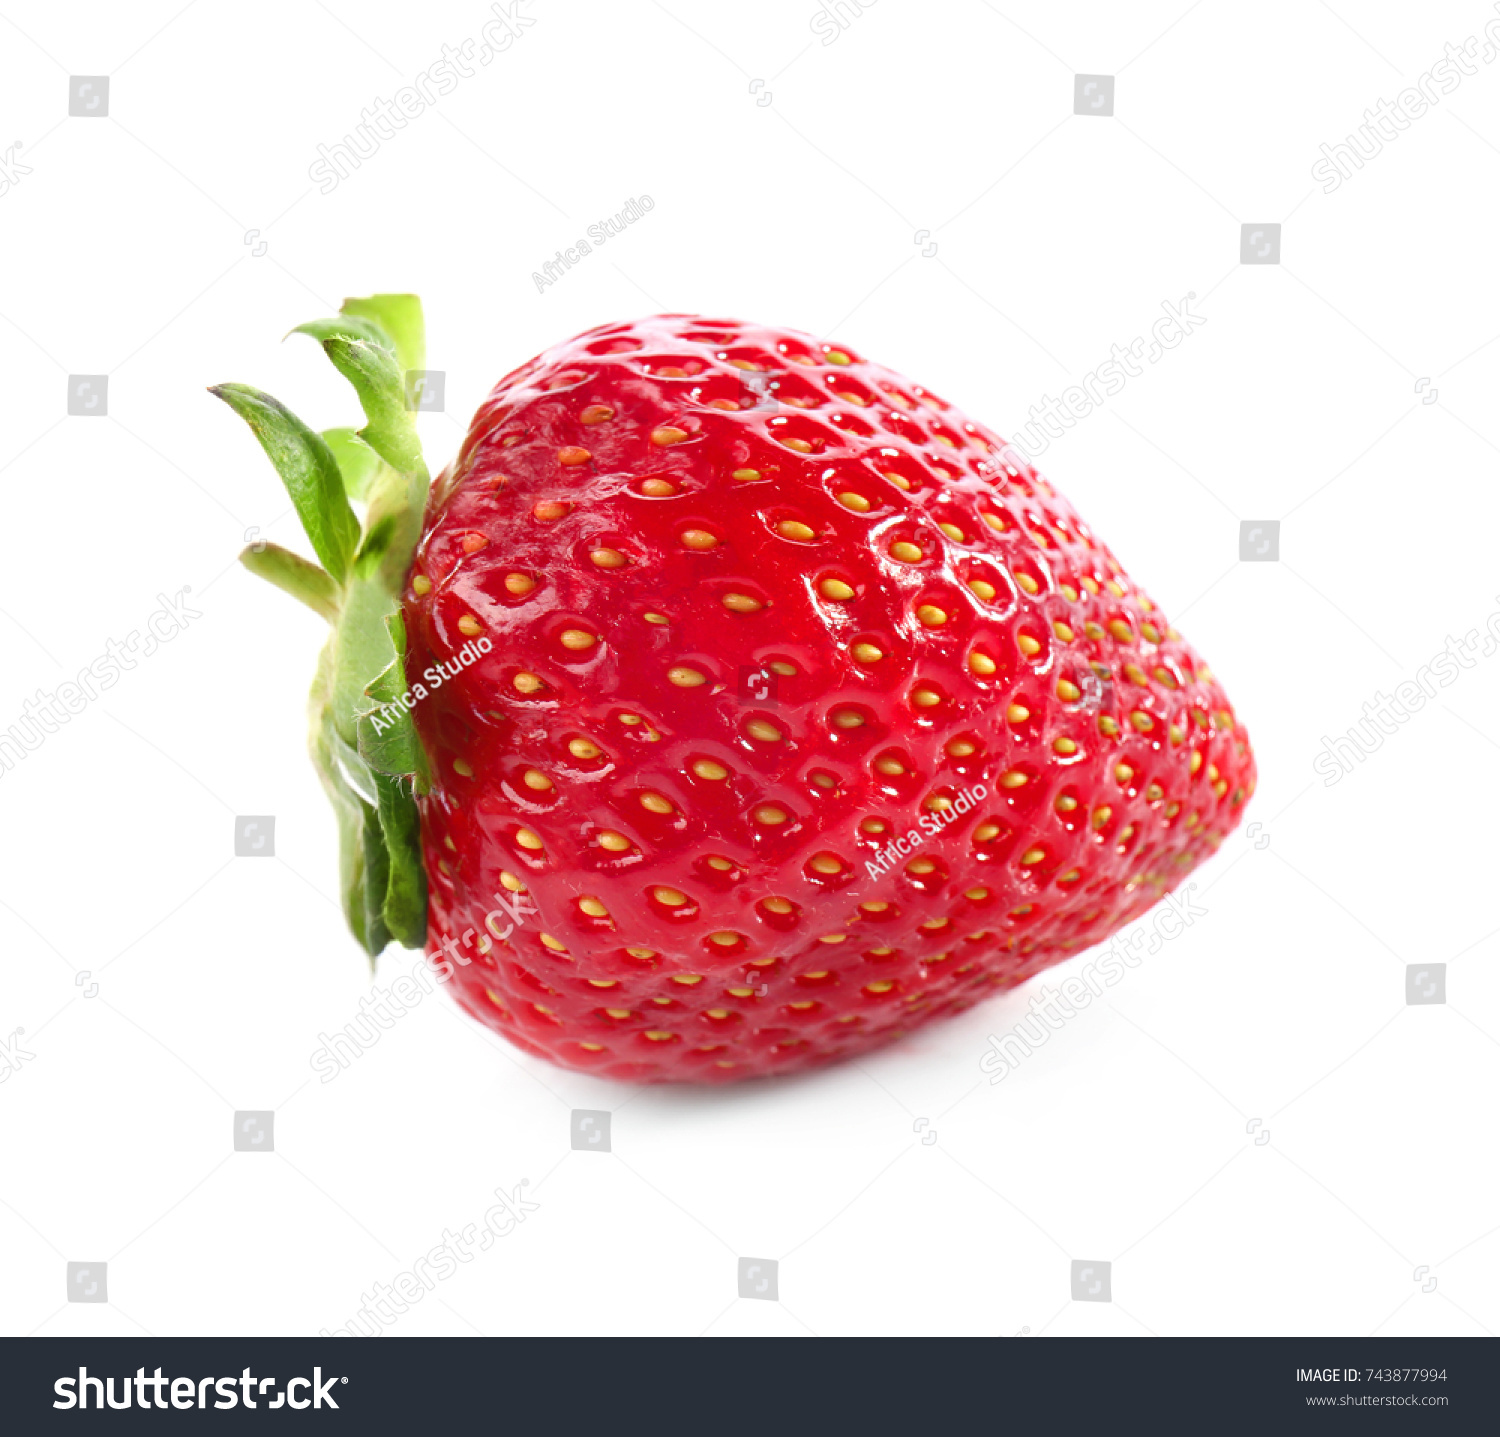 Delicious ripe strawberry on white background #743877994